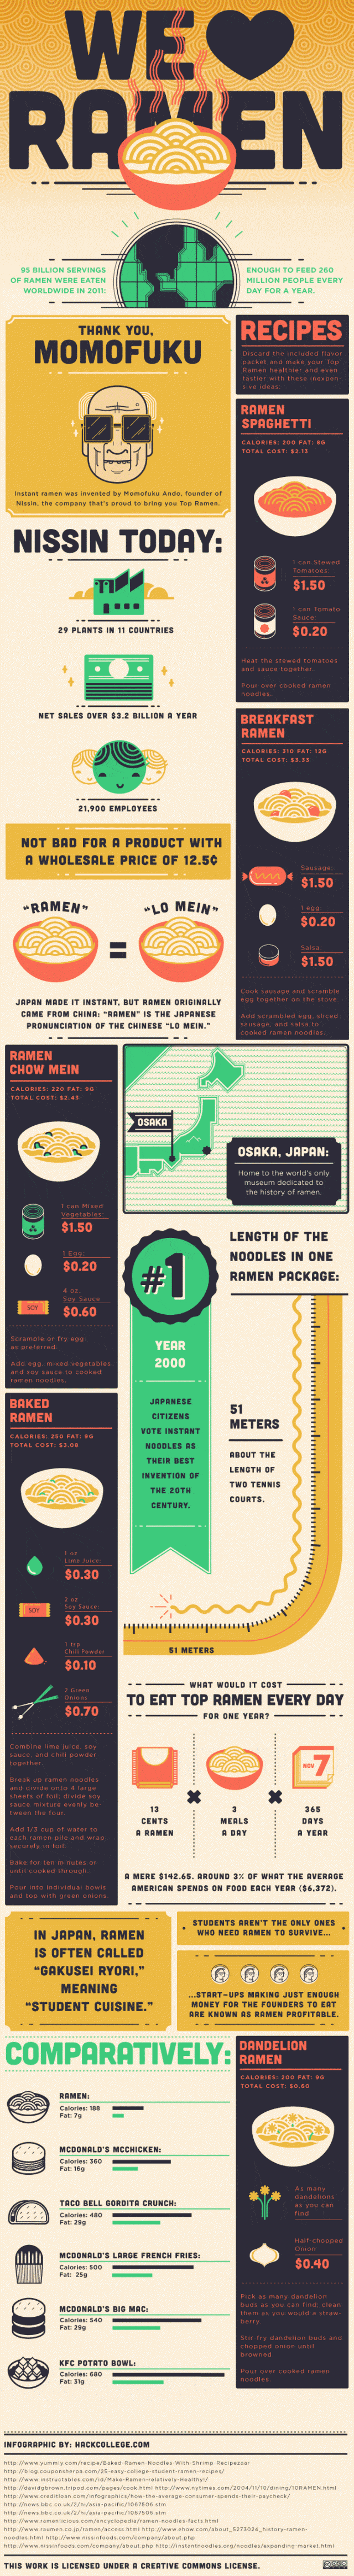 Some Facts about Ramen Noodles